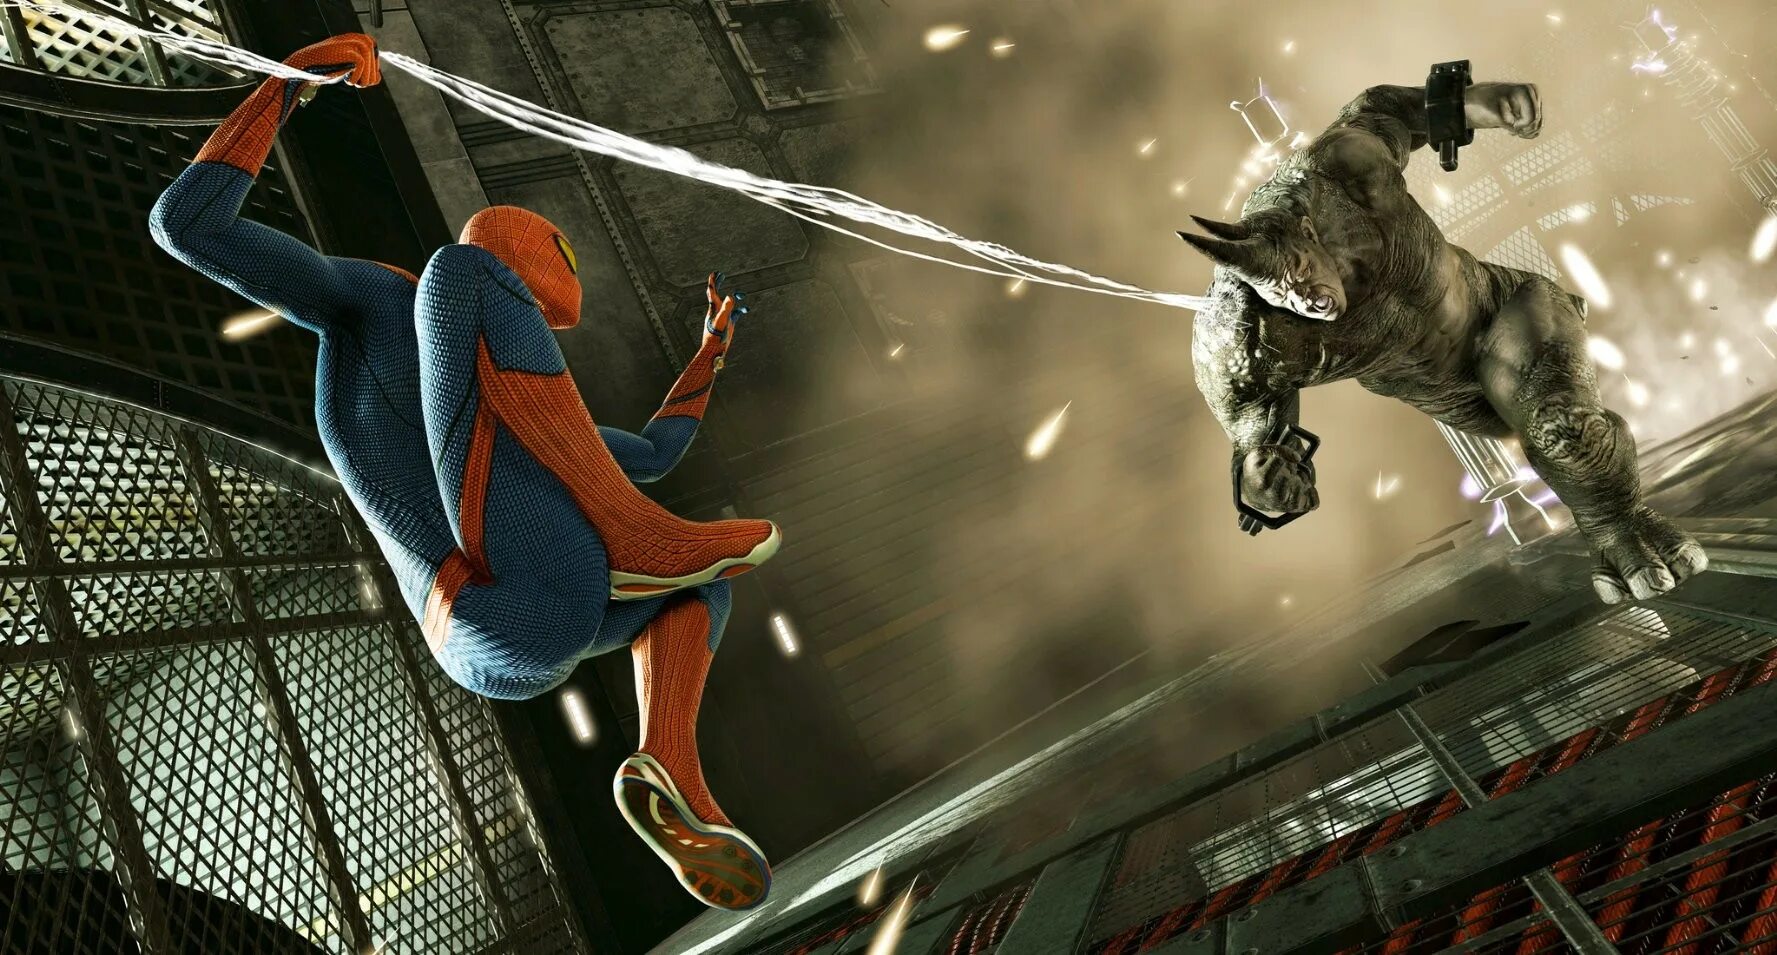 Spider man игра 2012. The amazing Spider-man (игра, 2012). Spider man 2012 игра. Xbox 360 новый человек-паук (the amazing Spider-man). The amazing Spider-man 2 (новый человек — паук 2).